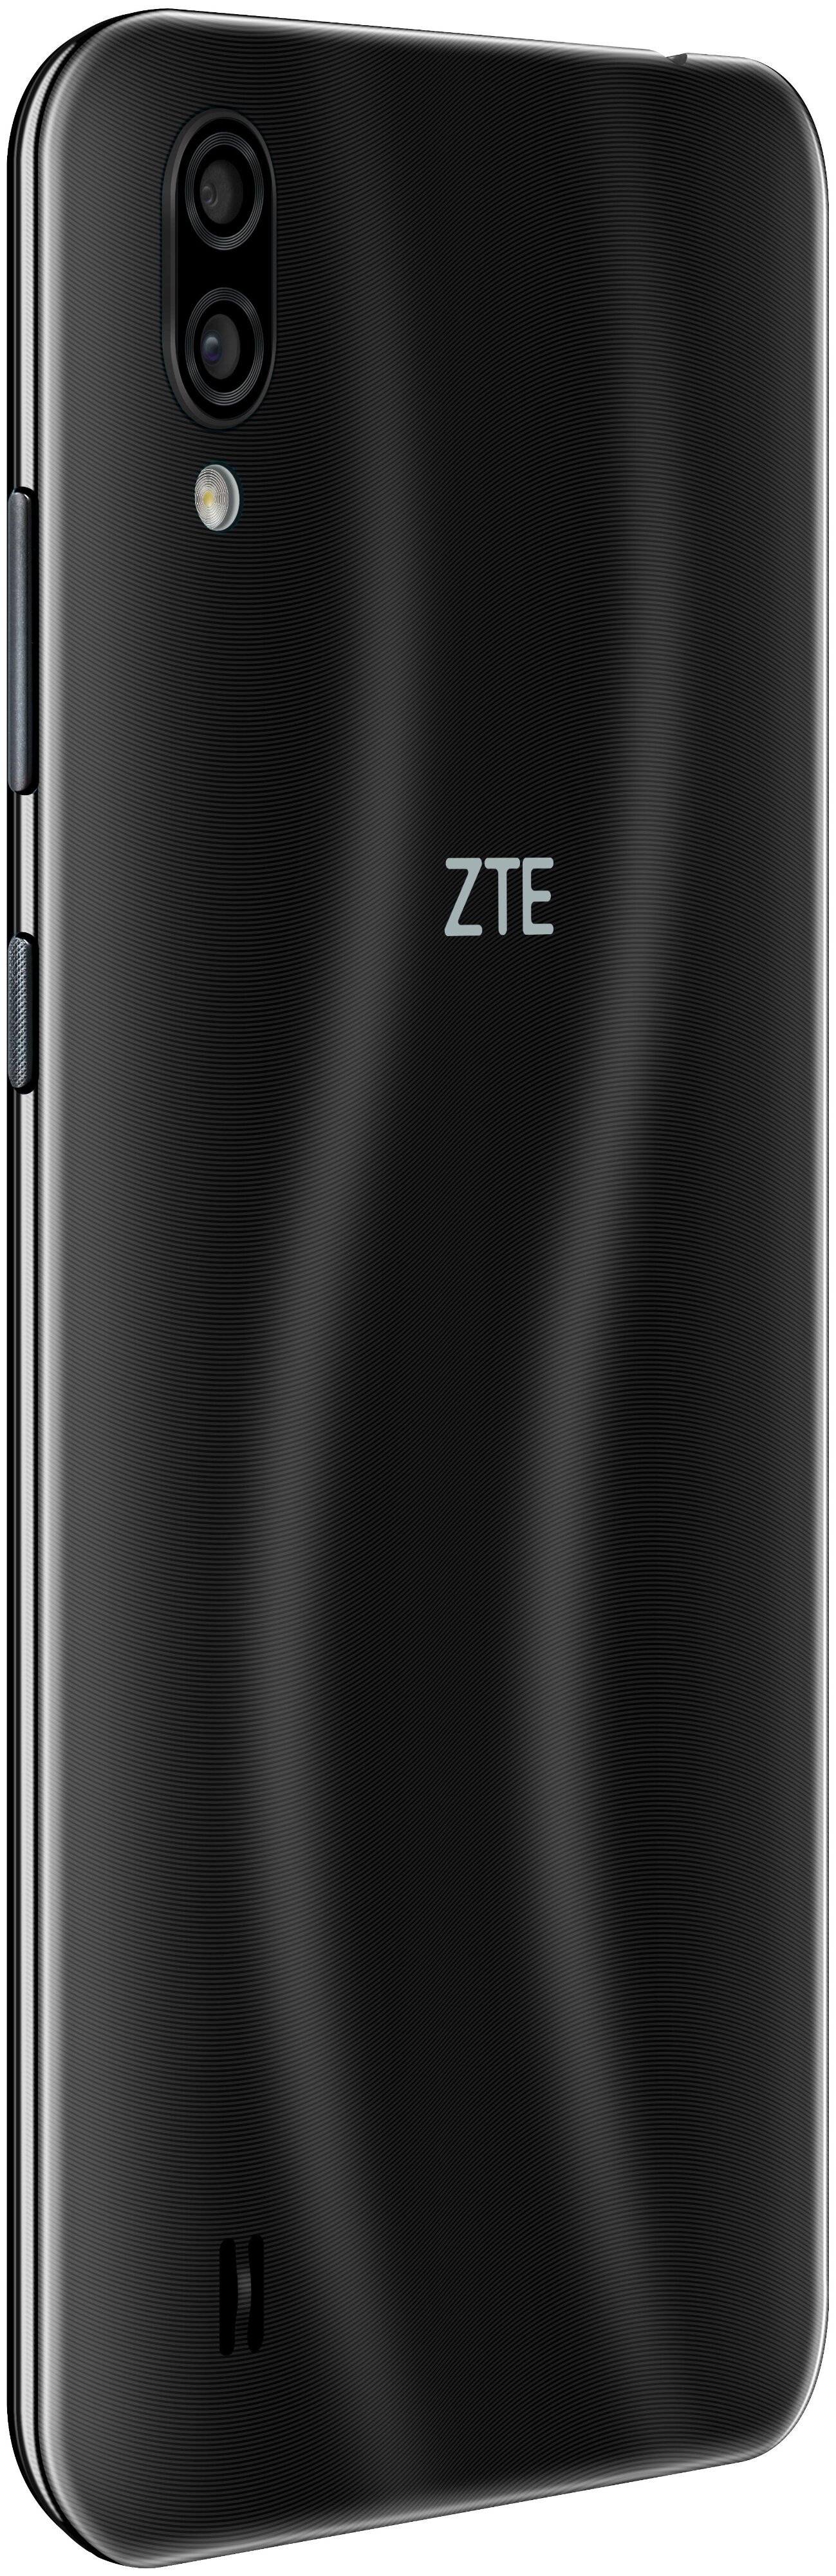 ZTE Blade A5 (2020) 2/32GB - двойная камера: 13 МП, 2 МП